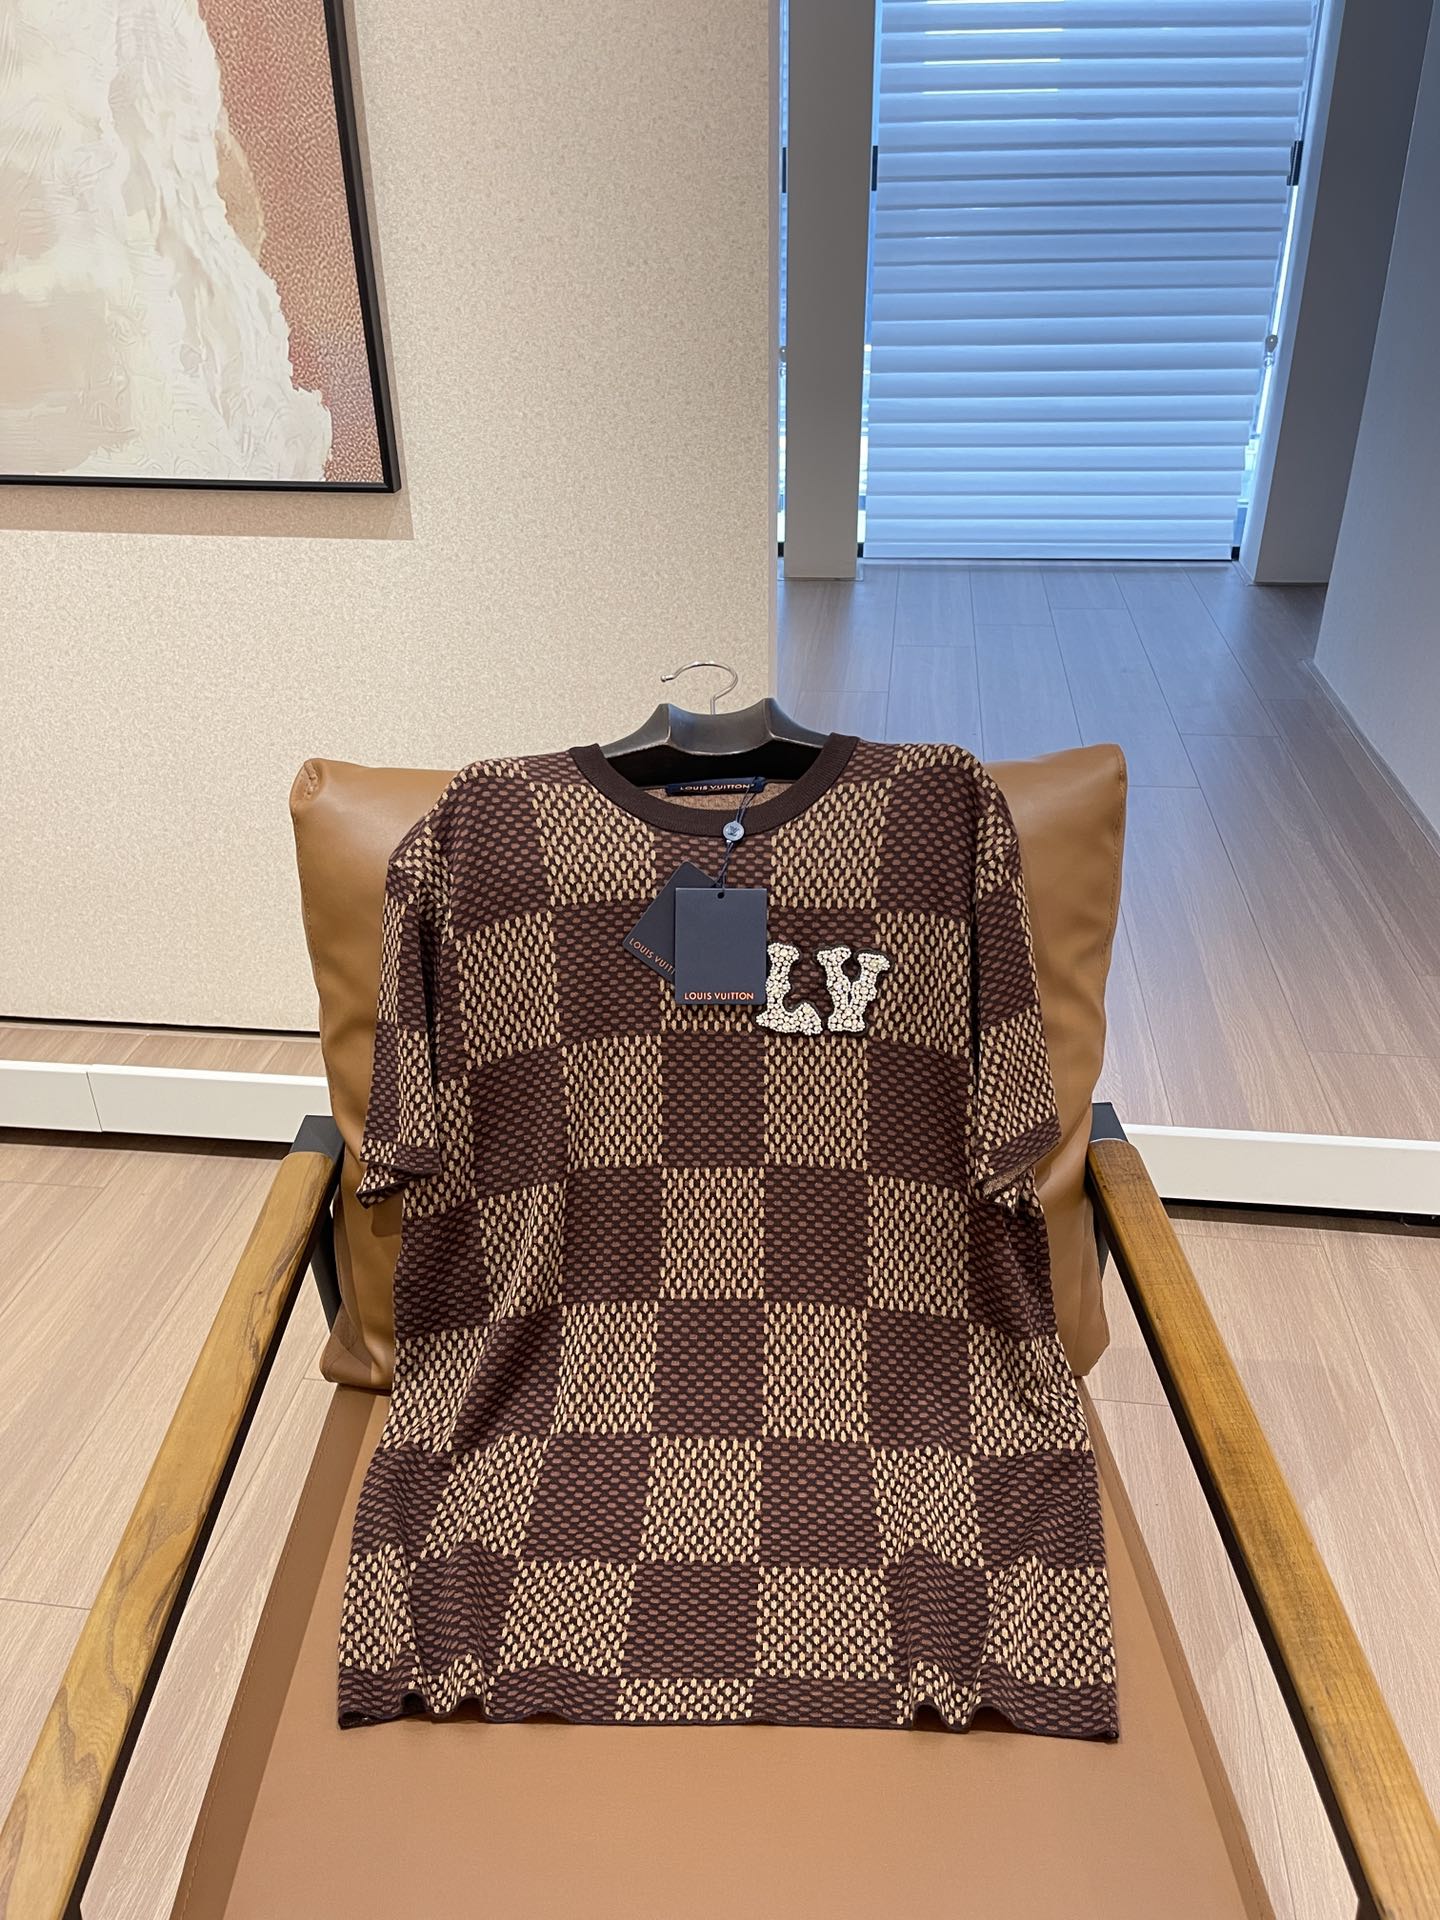 Louis Vuitton Kleding T-Shirt Chocoladekleur Borduurwerk Katoen Breien